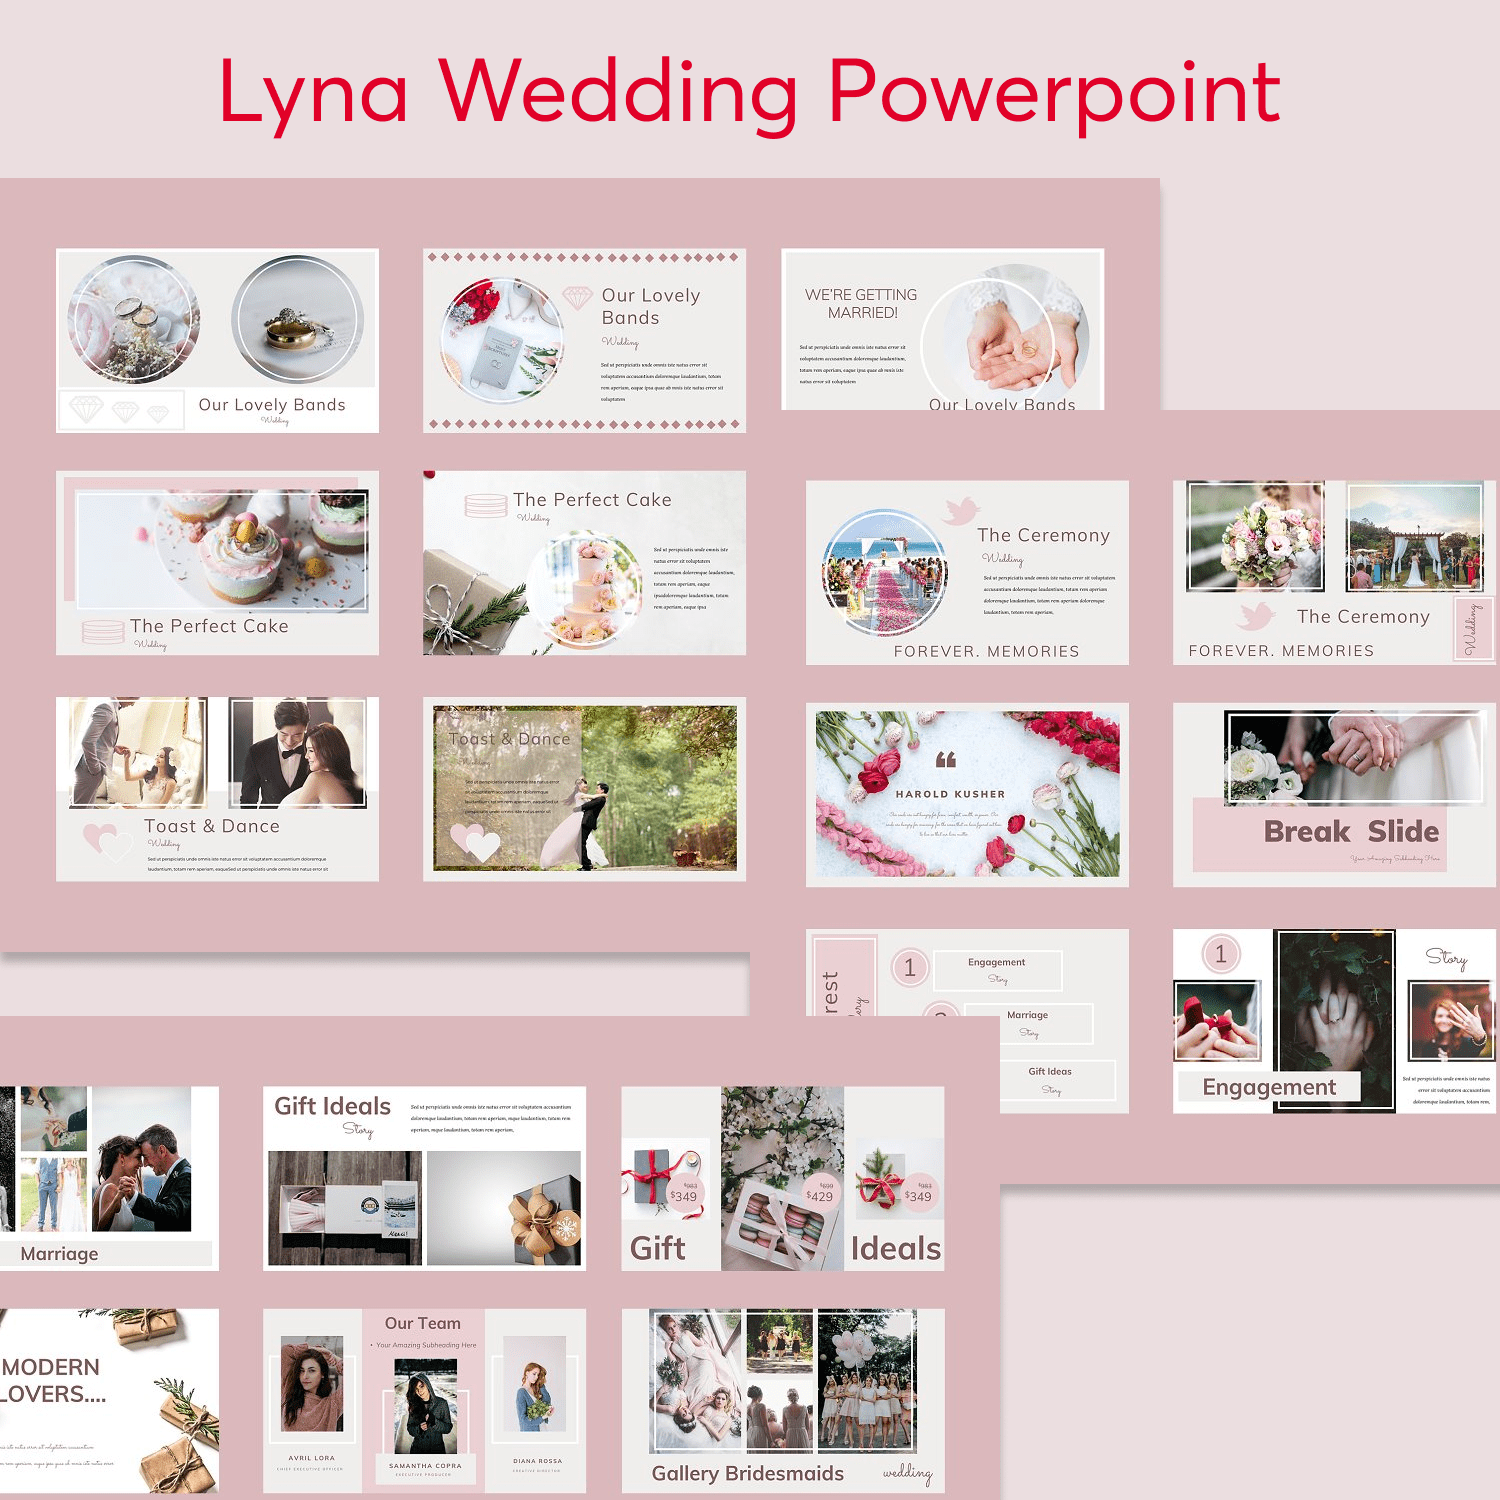 Lyna Wedding Powerpoint.